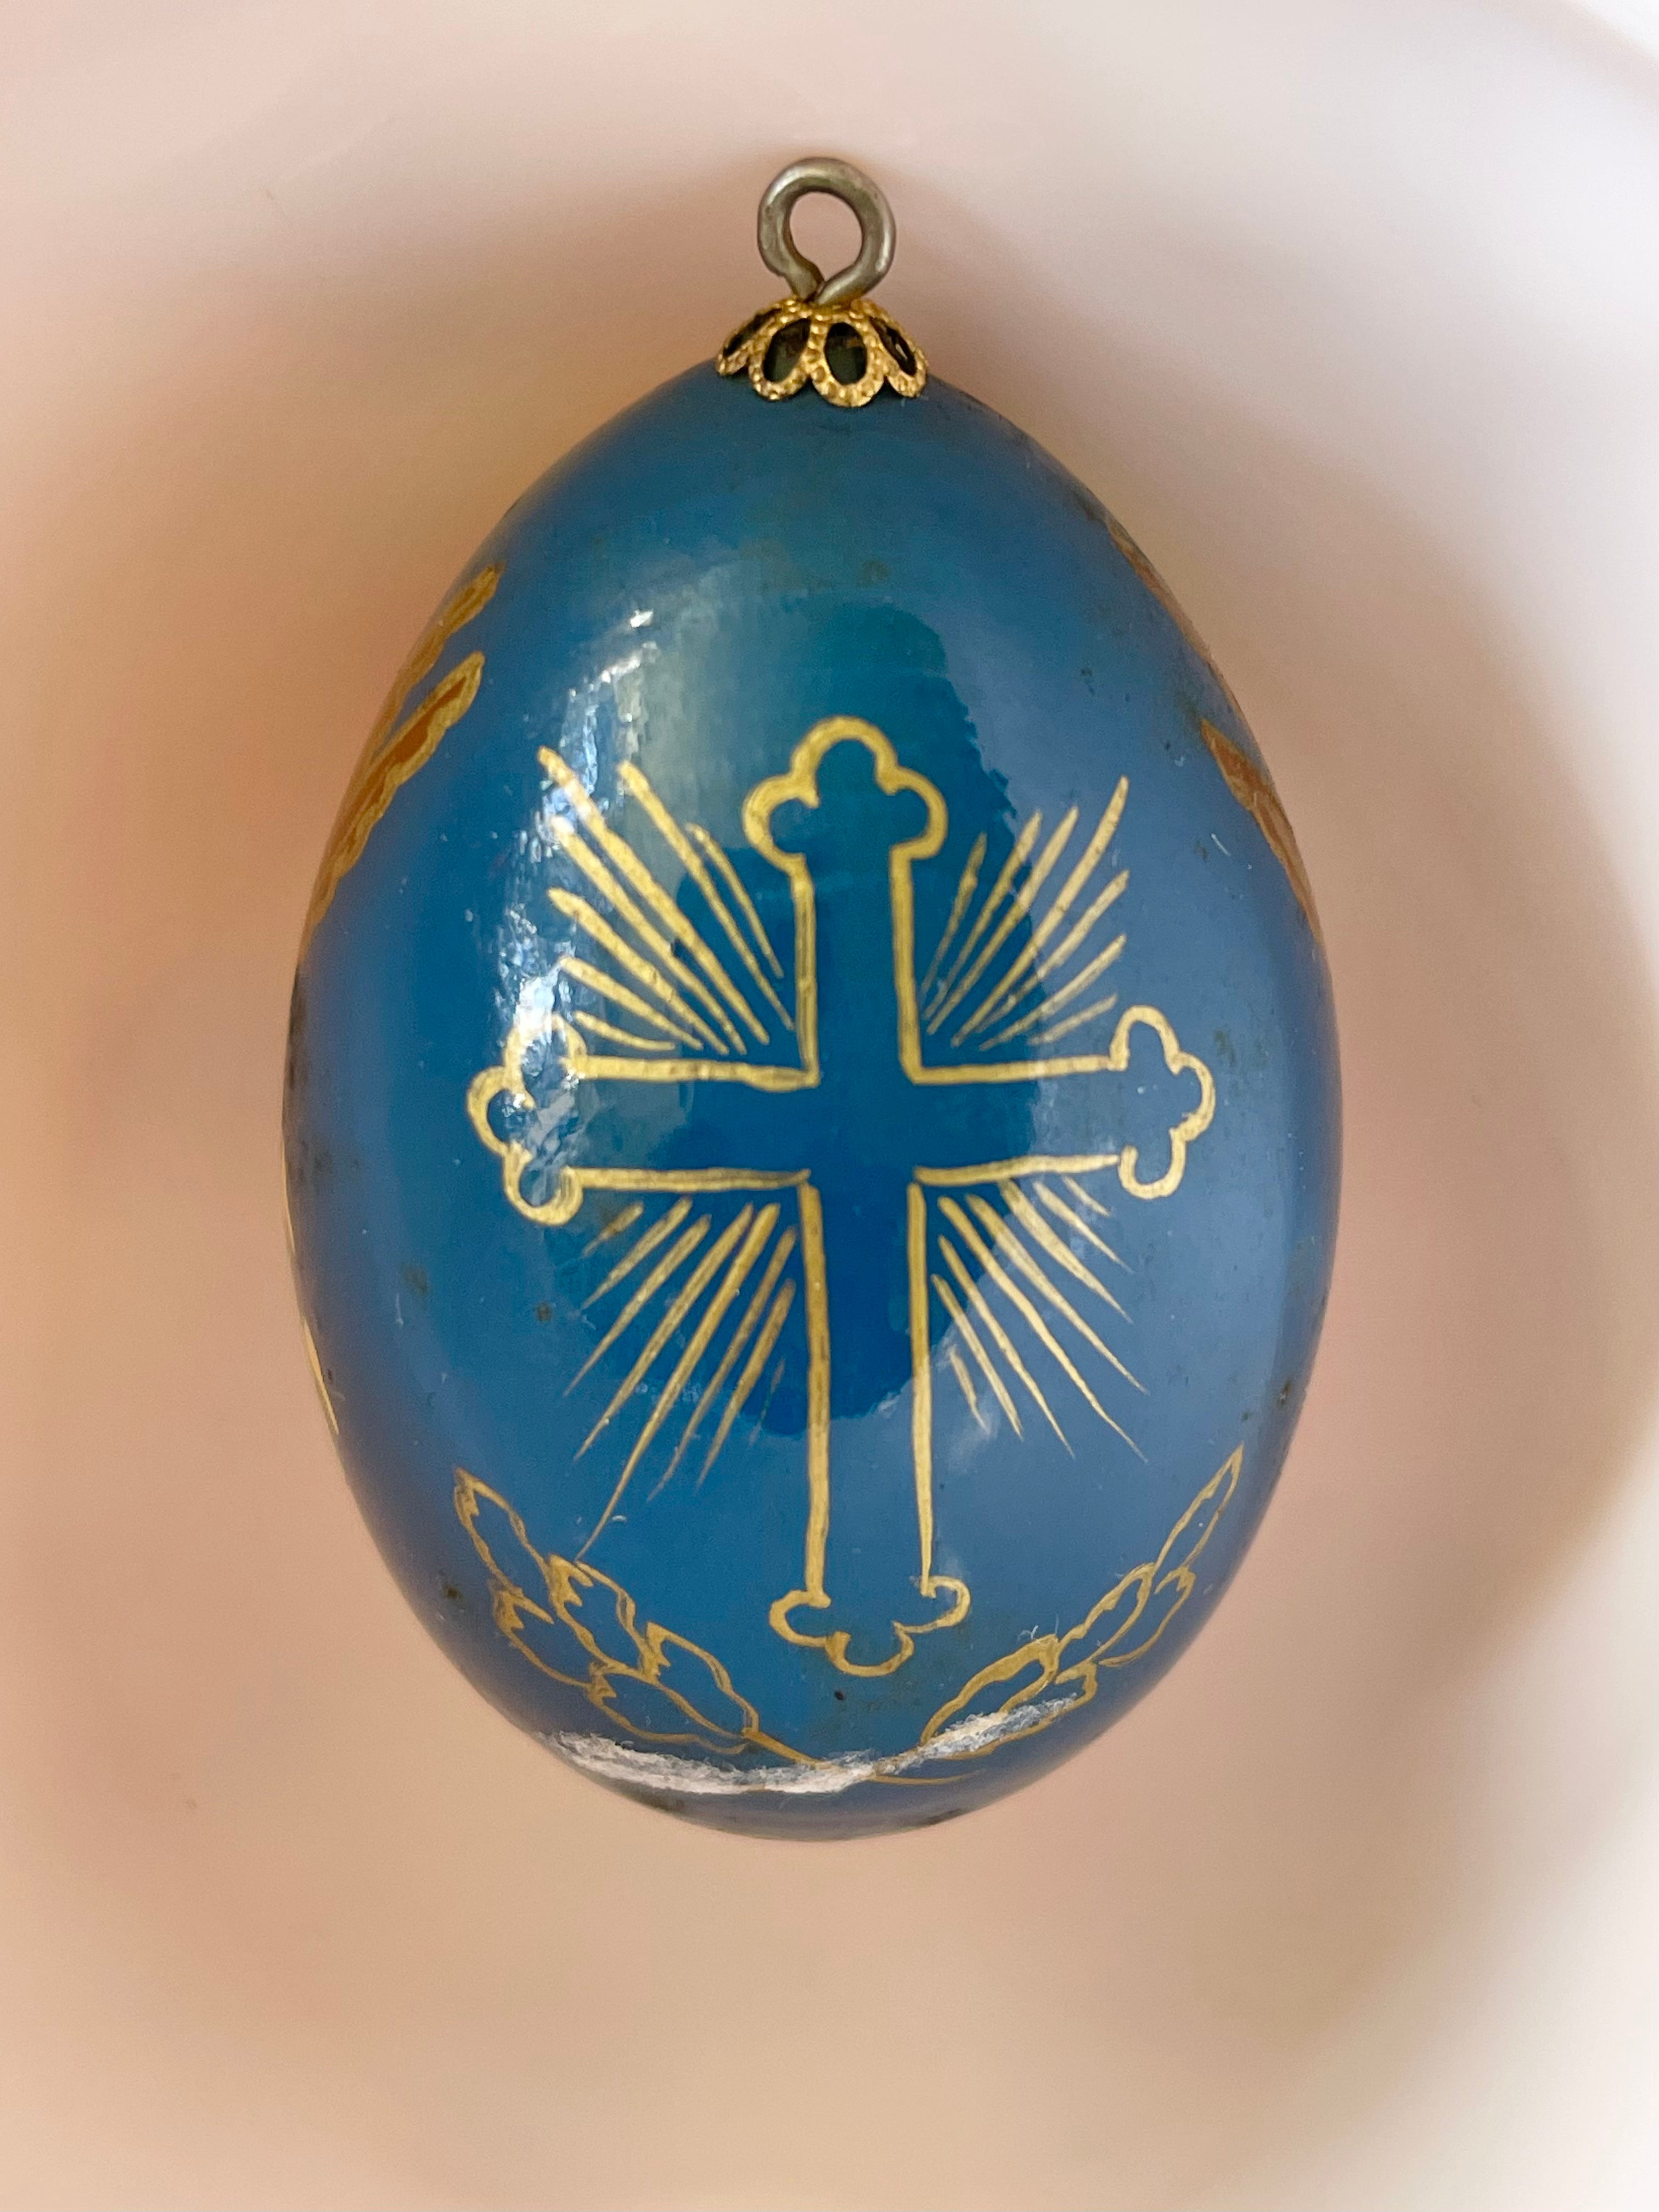 Hand-painted Devotional Egg of the Risen Christ